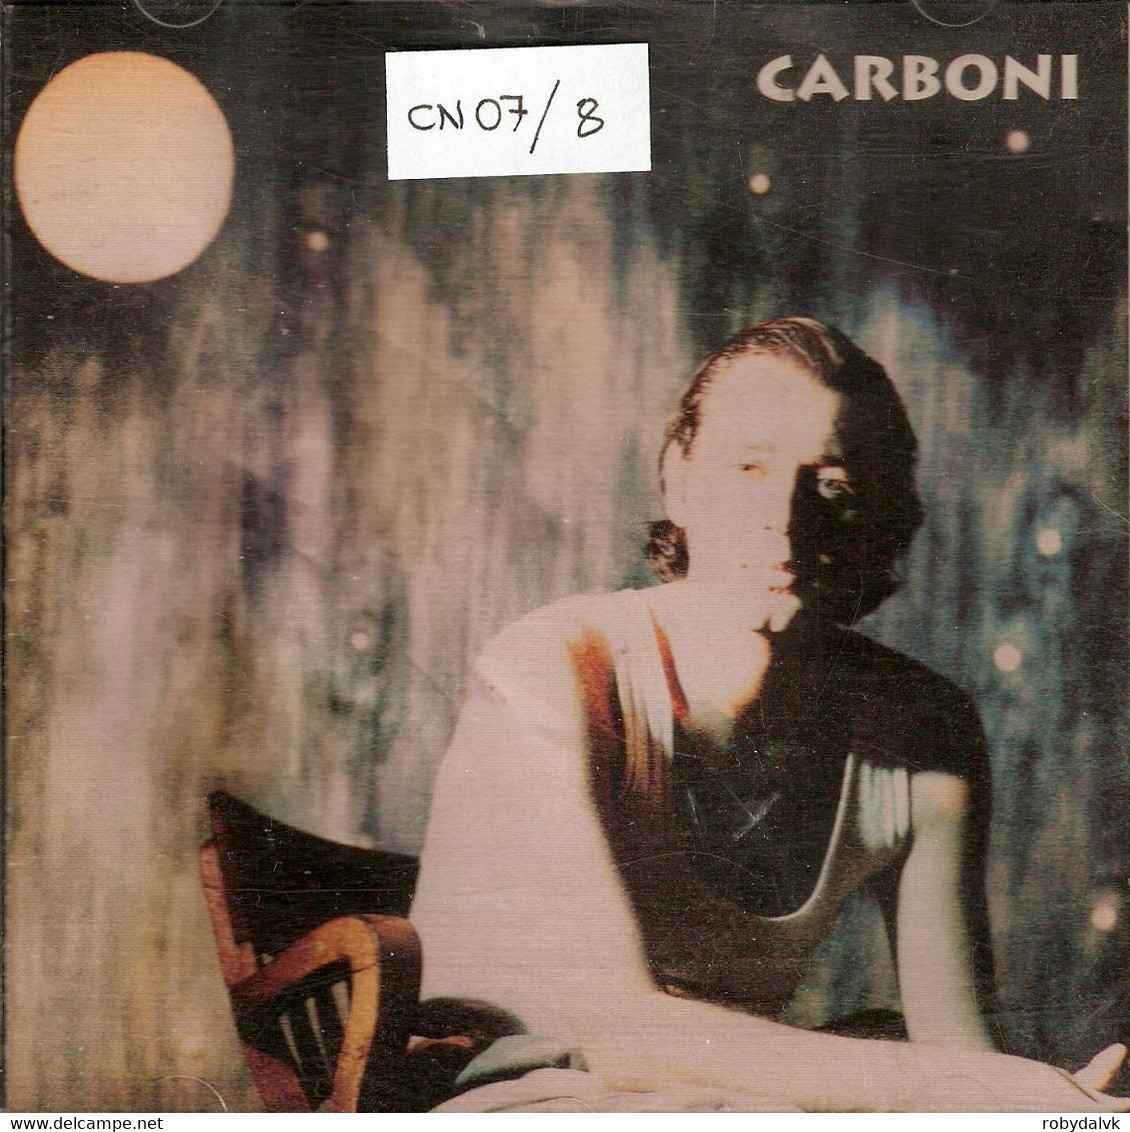 CN07 - LUCA CARBONI : CARBONI - Autres - Musique Italienne